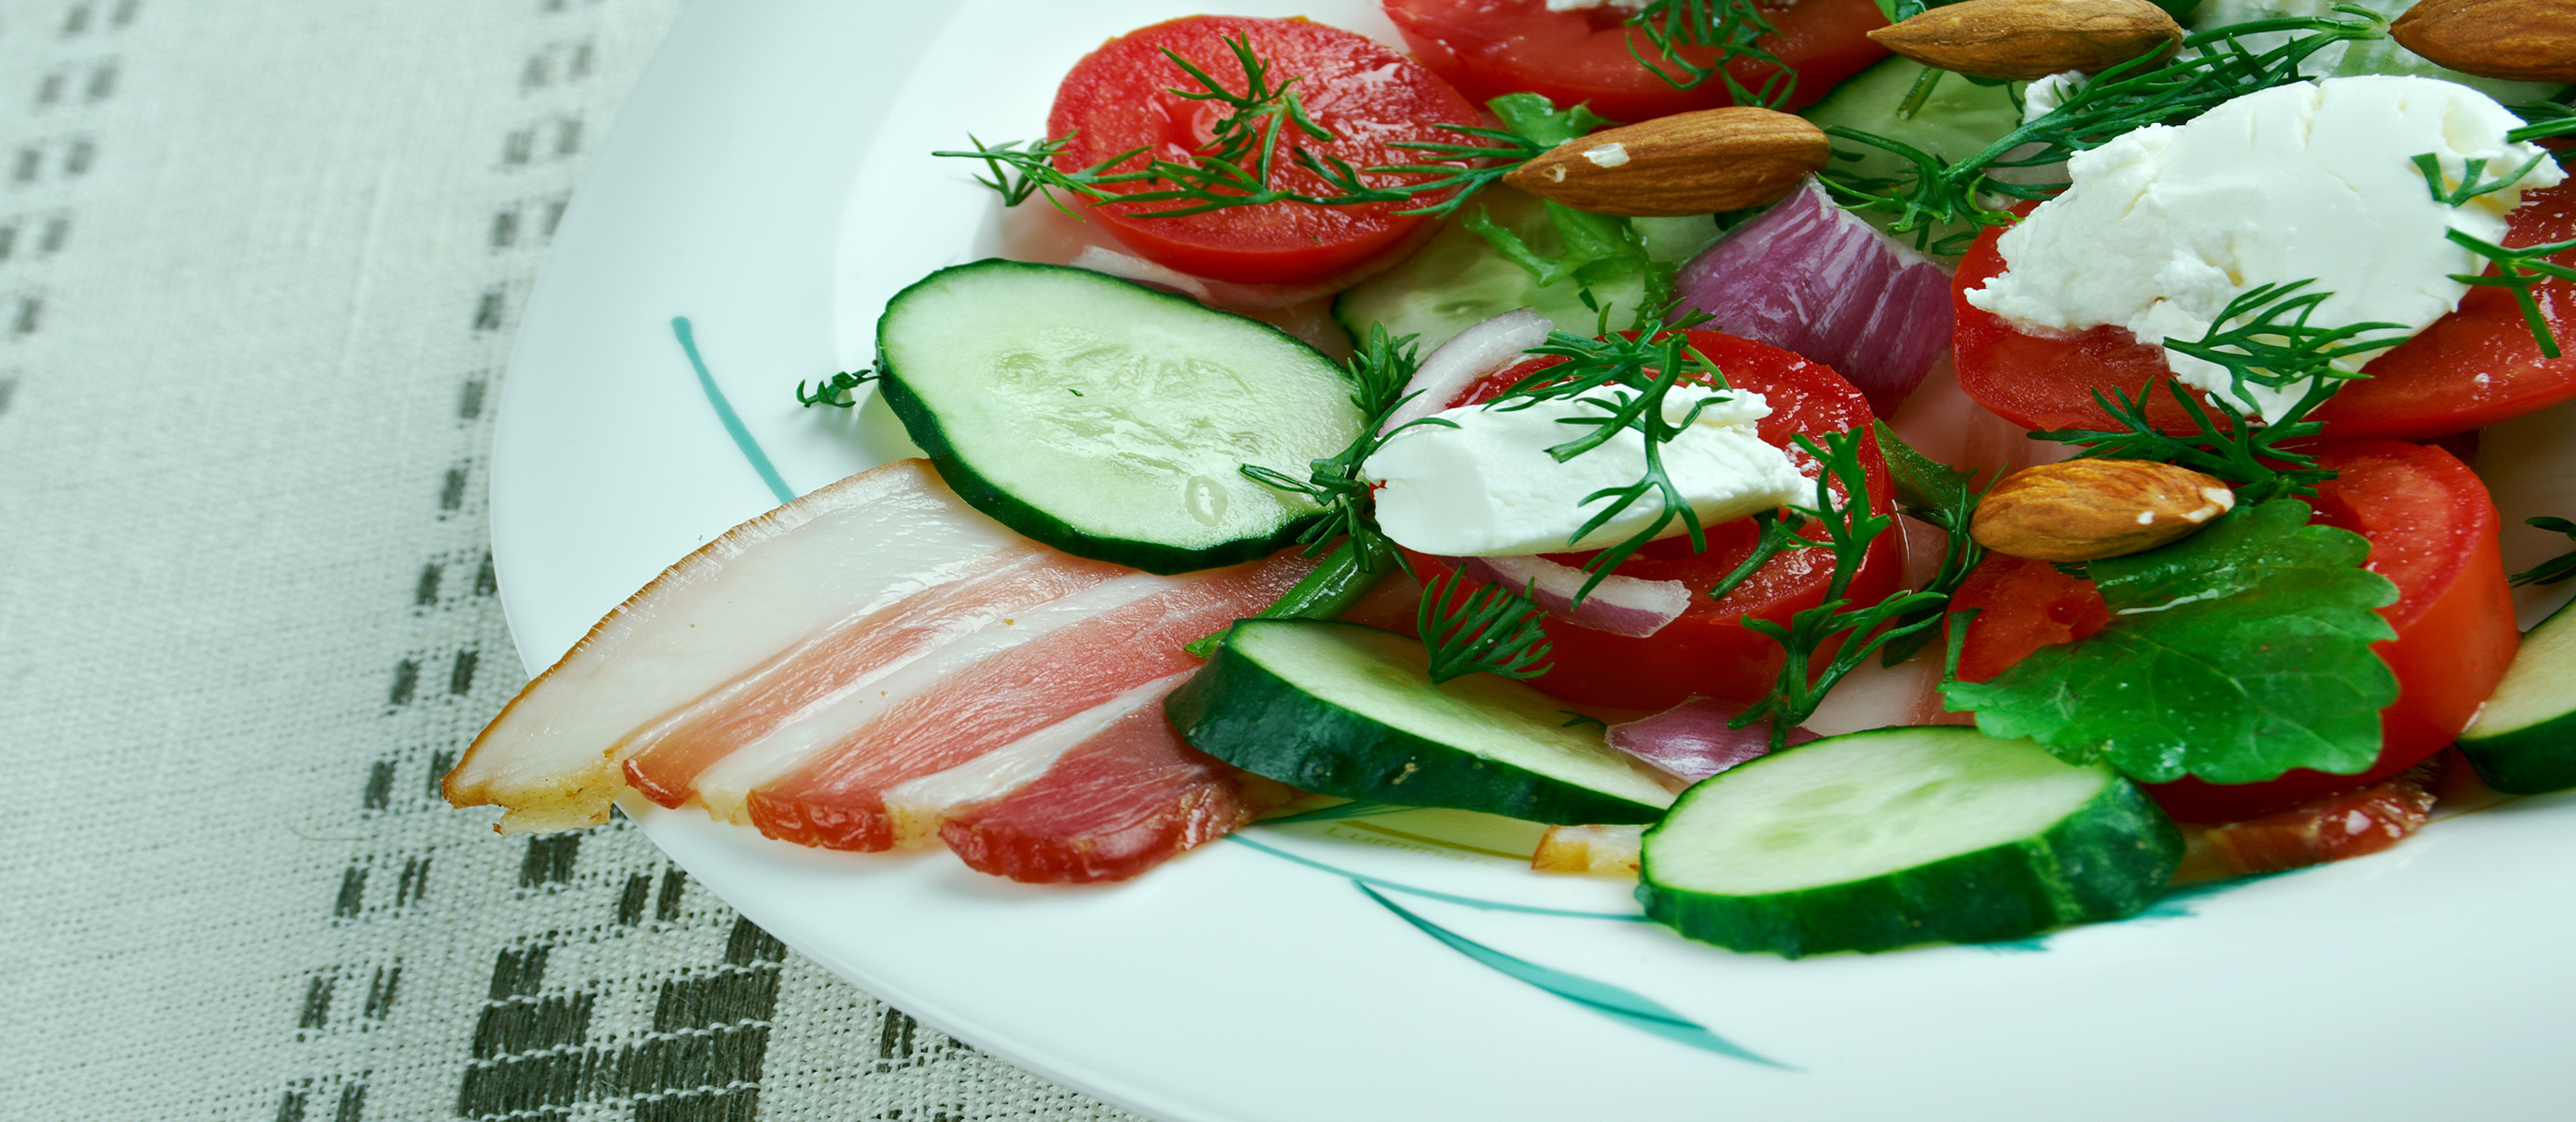 9 Most Popular French Salads - TasteAtlas